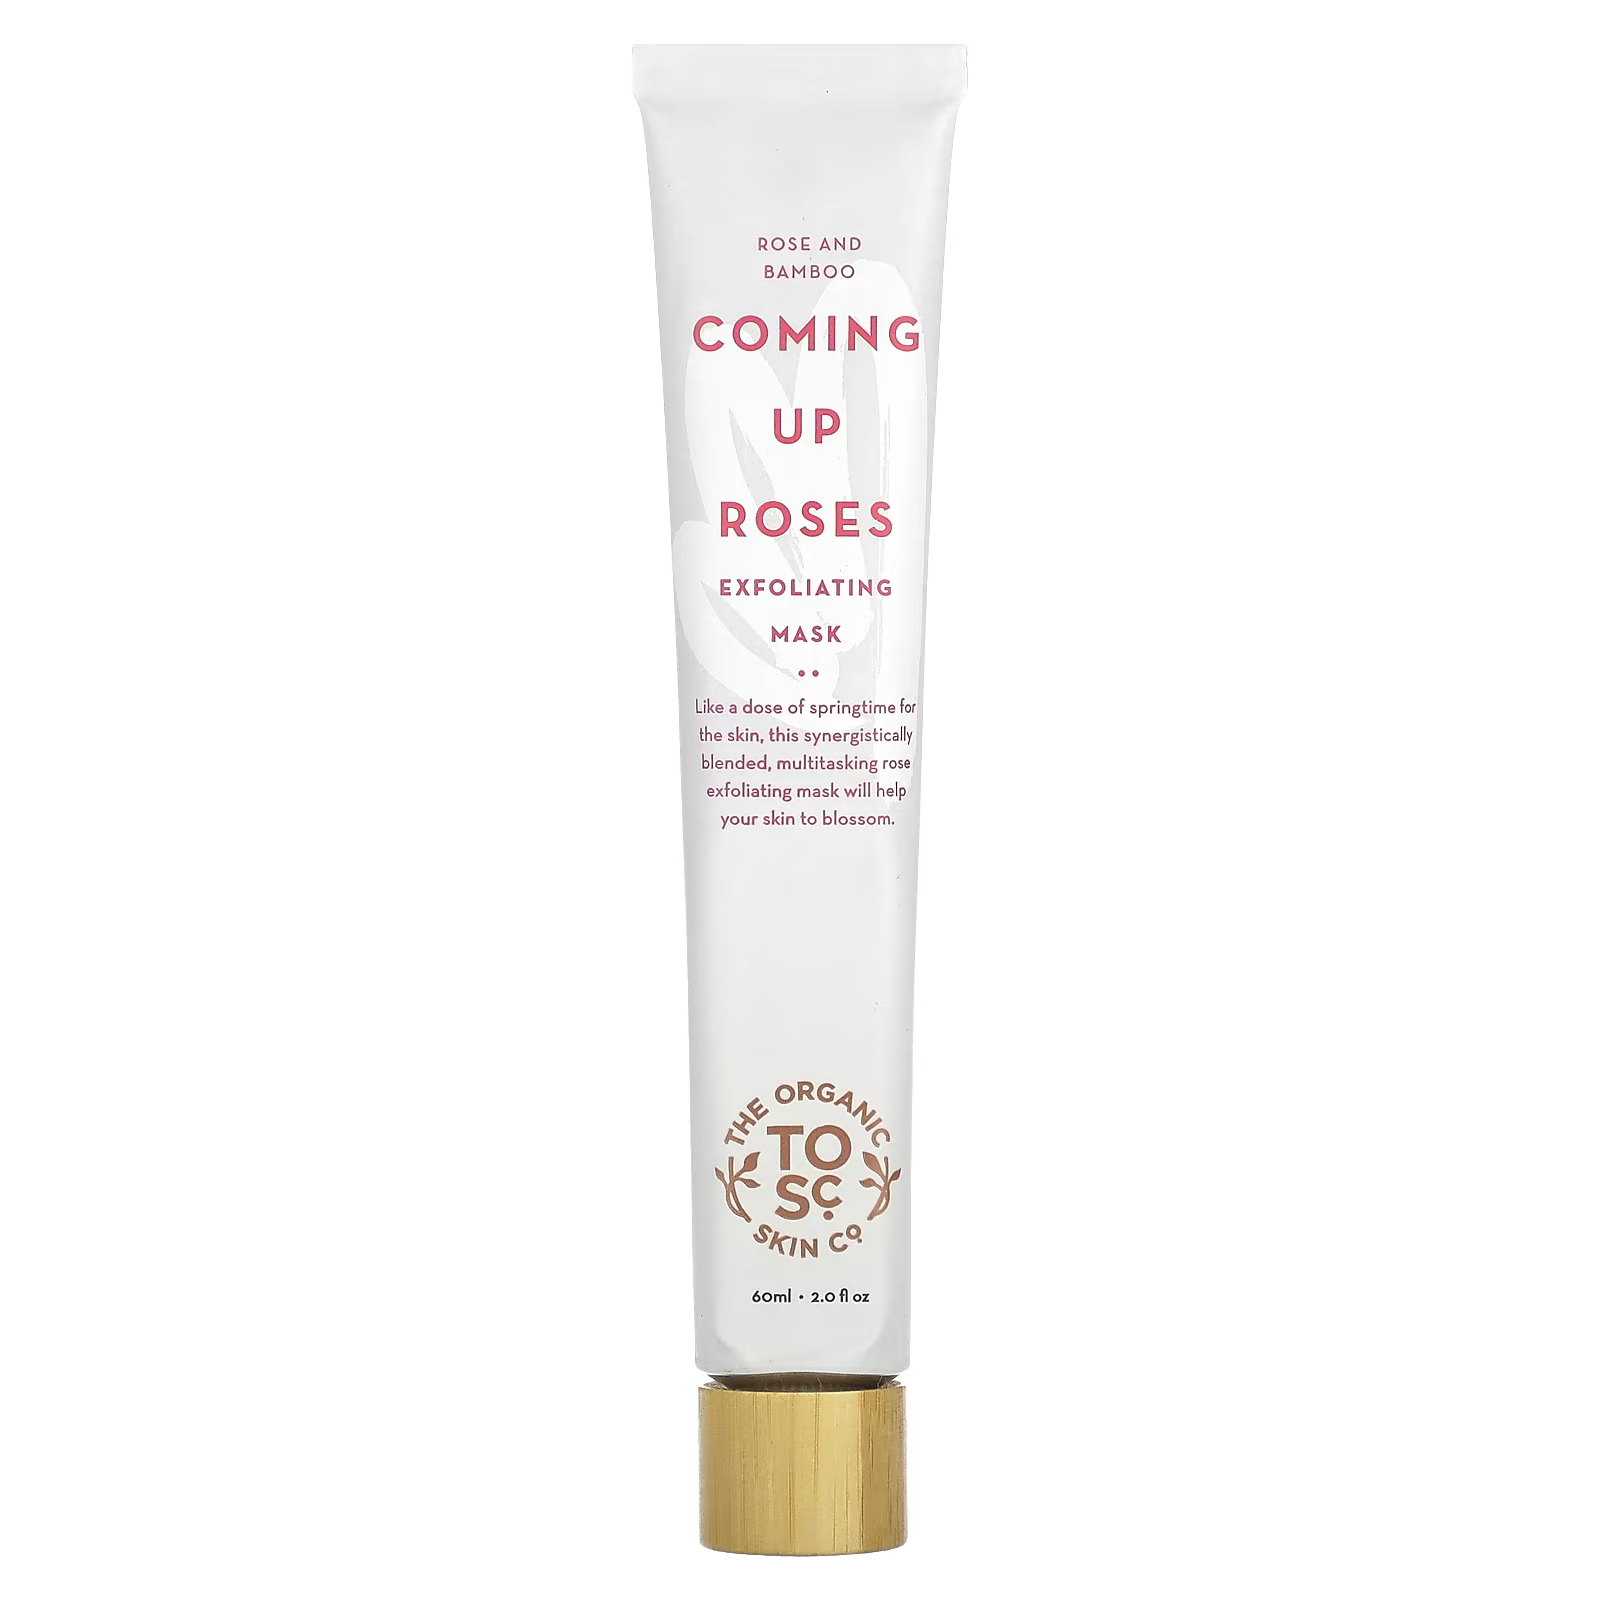 The Organic Skin Co. Coming Up Roses Отшелушивающая косметическая маска «Роза и бамбук», 2 жидкие унции (60 мл)